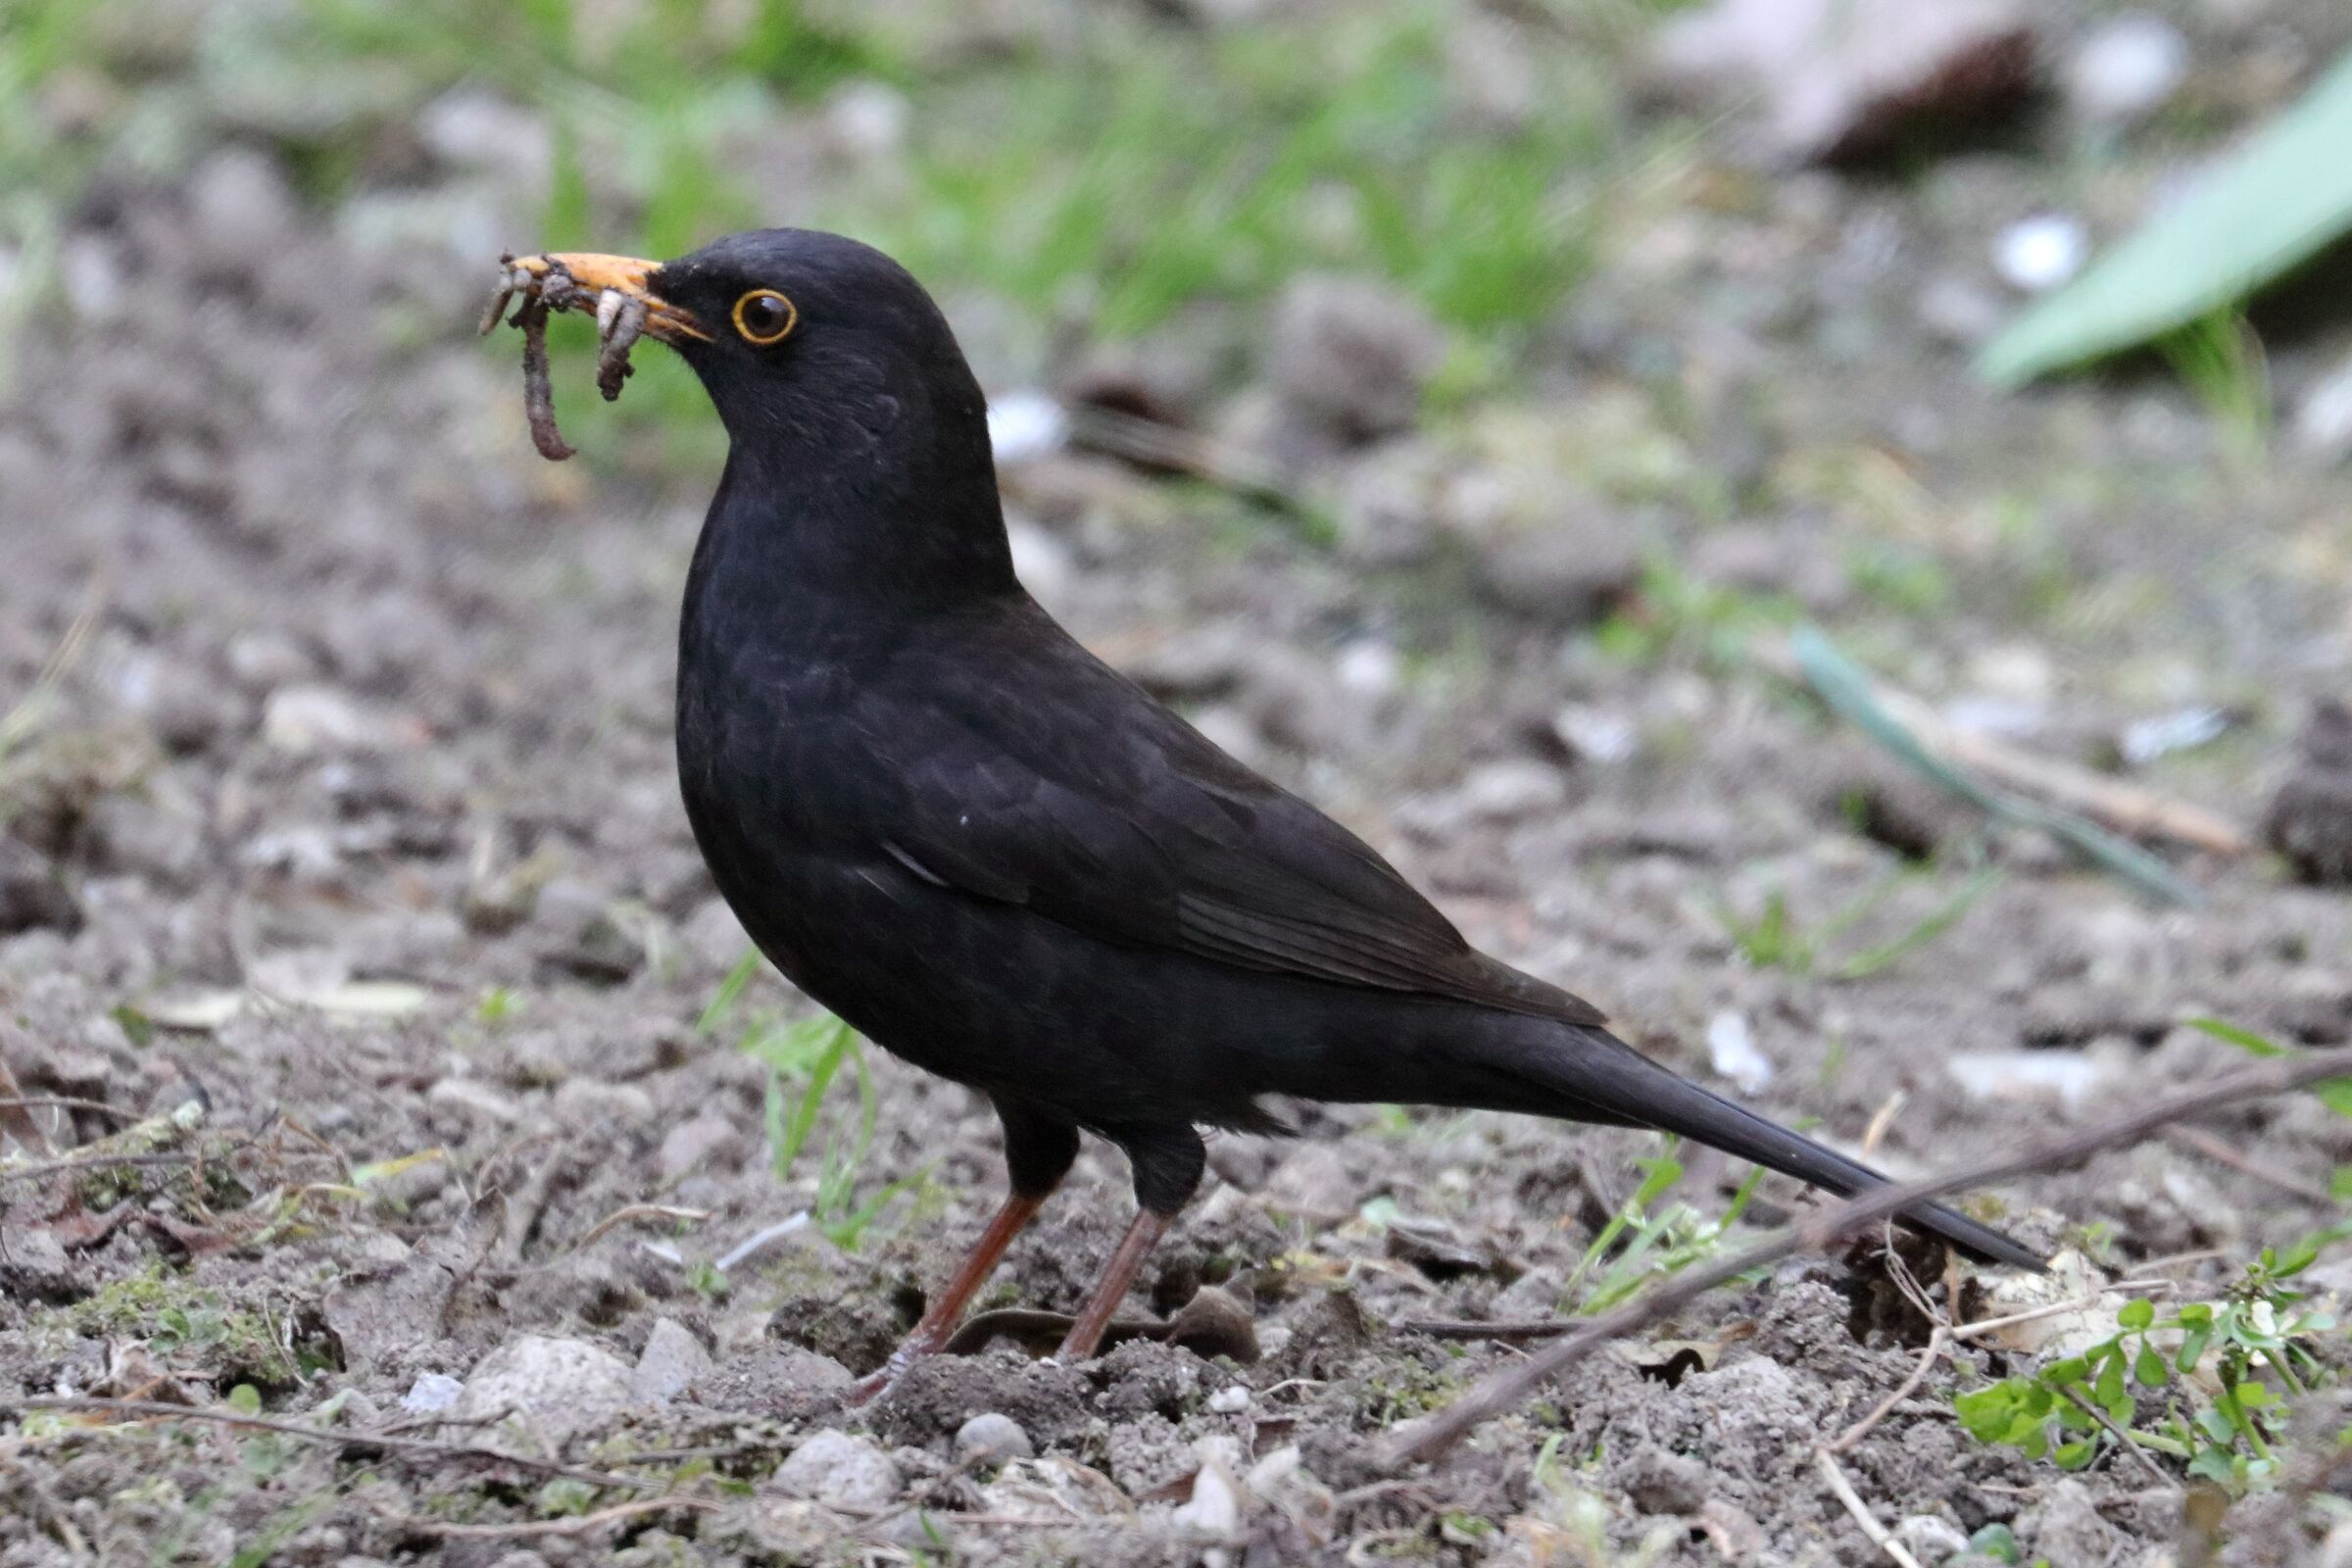 Blackbird with prey...